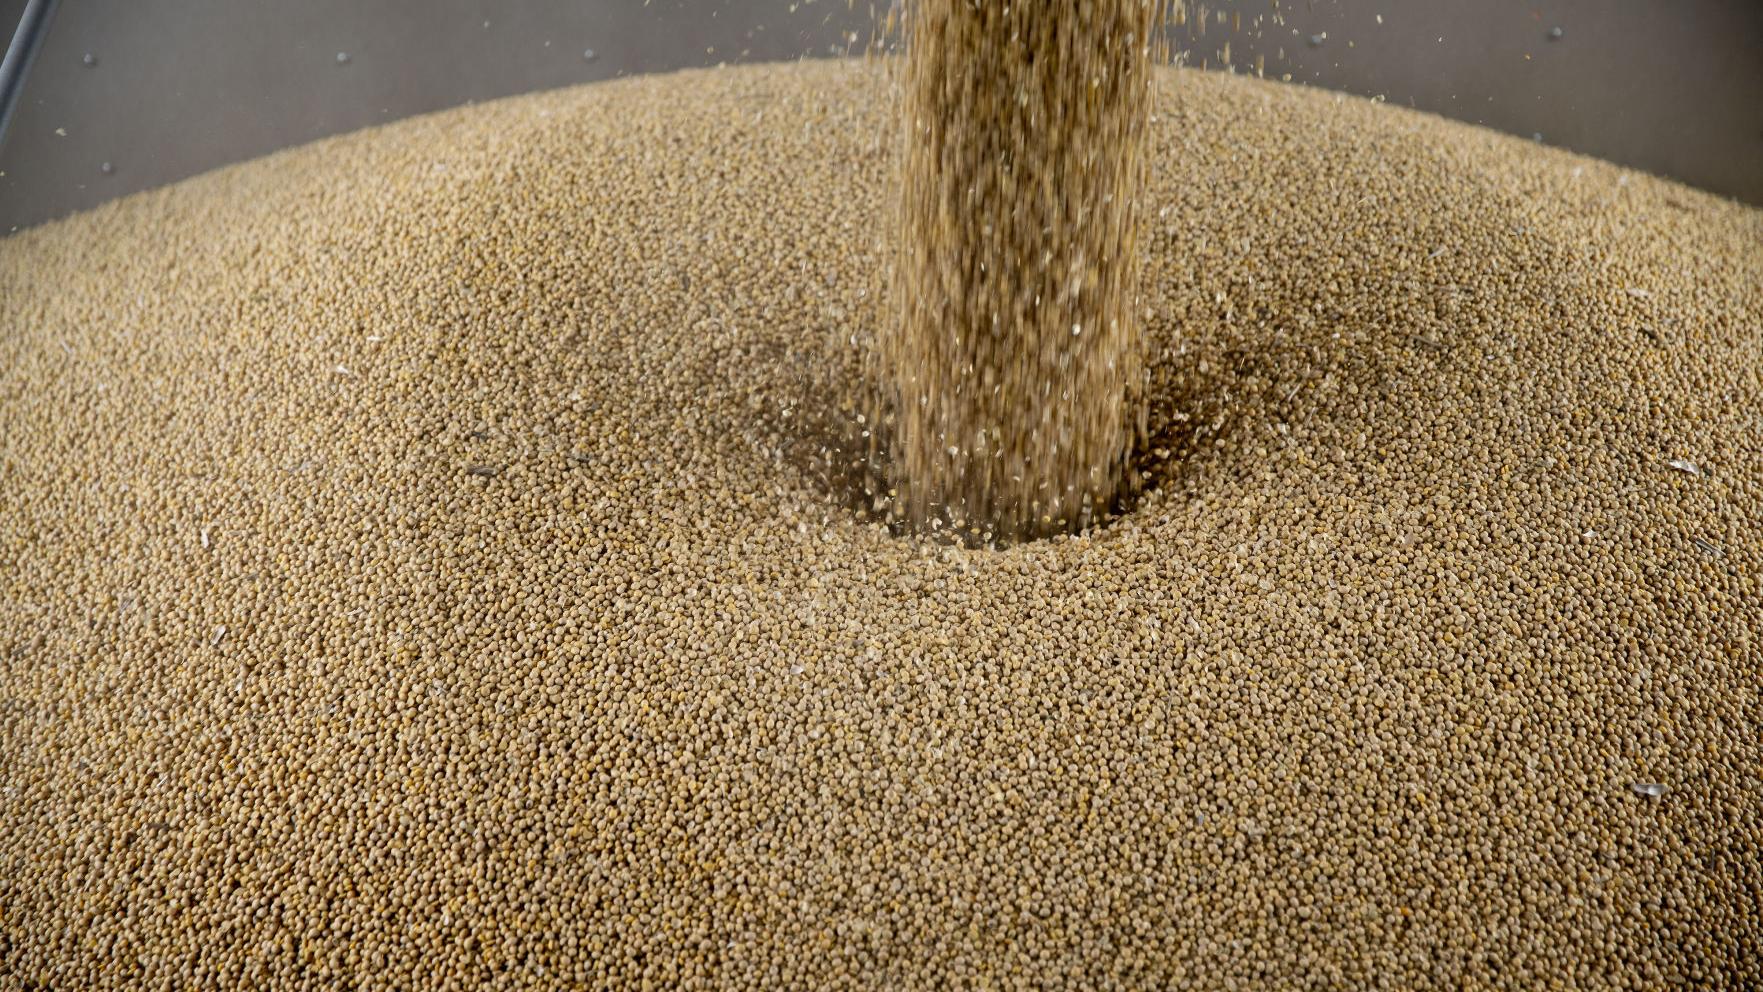 Grain Bin Entrapment Movie To Screen At Nebraska Power Farming